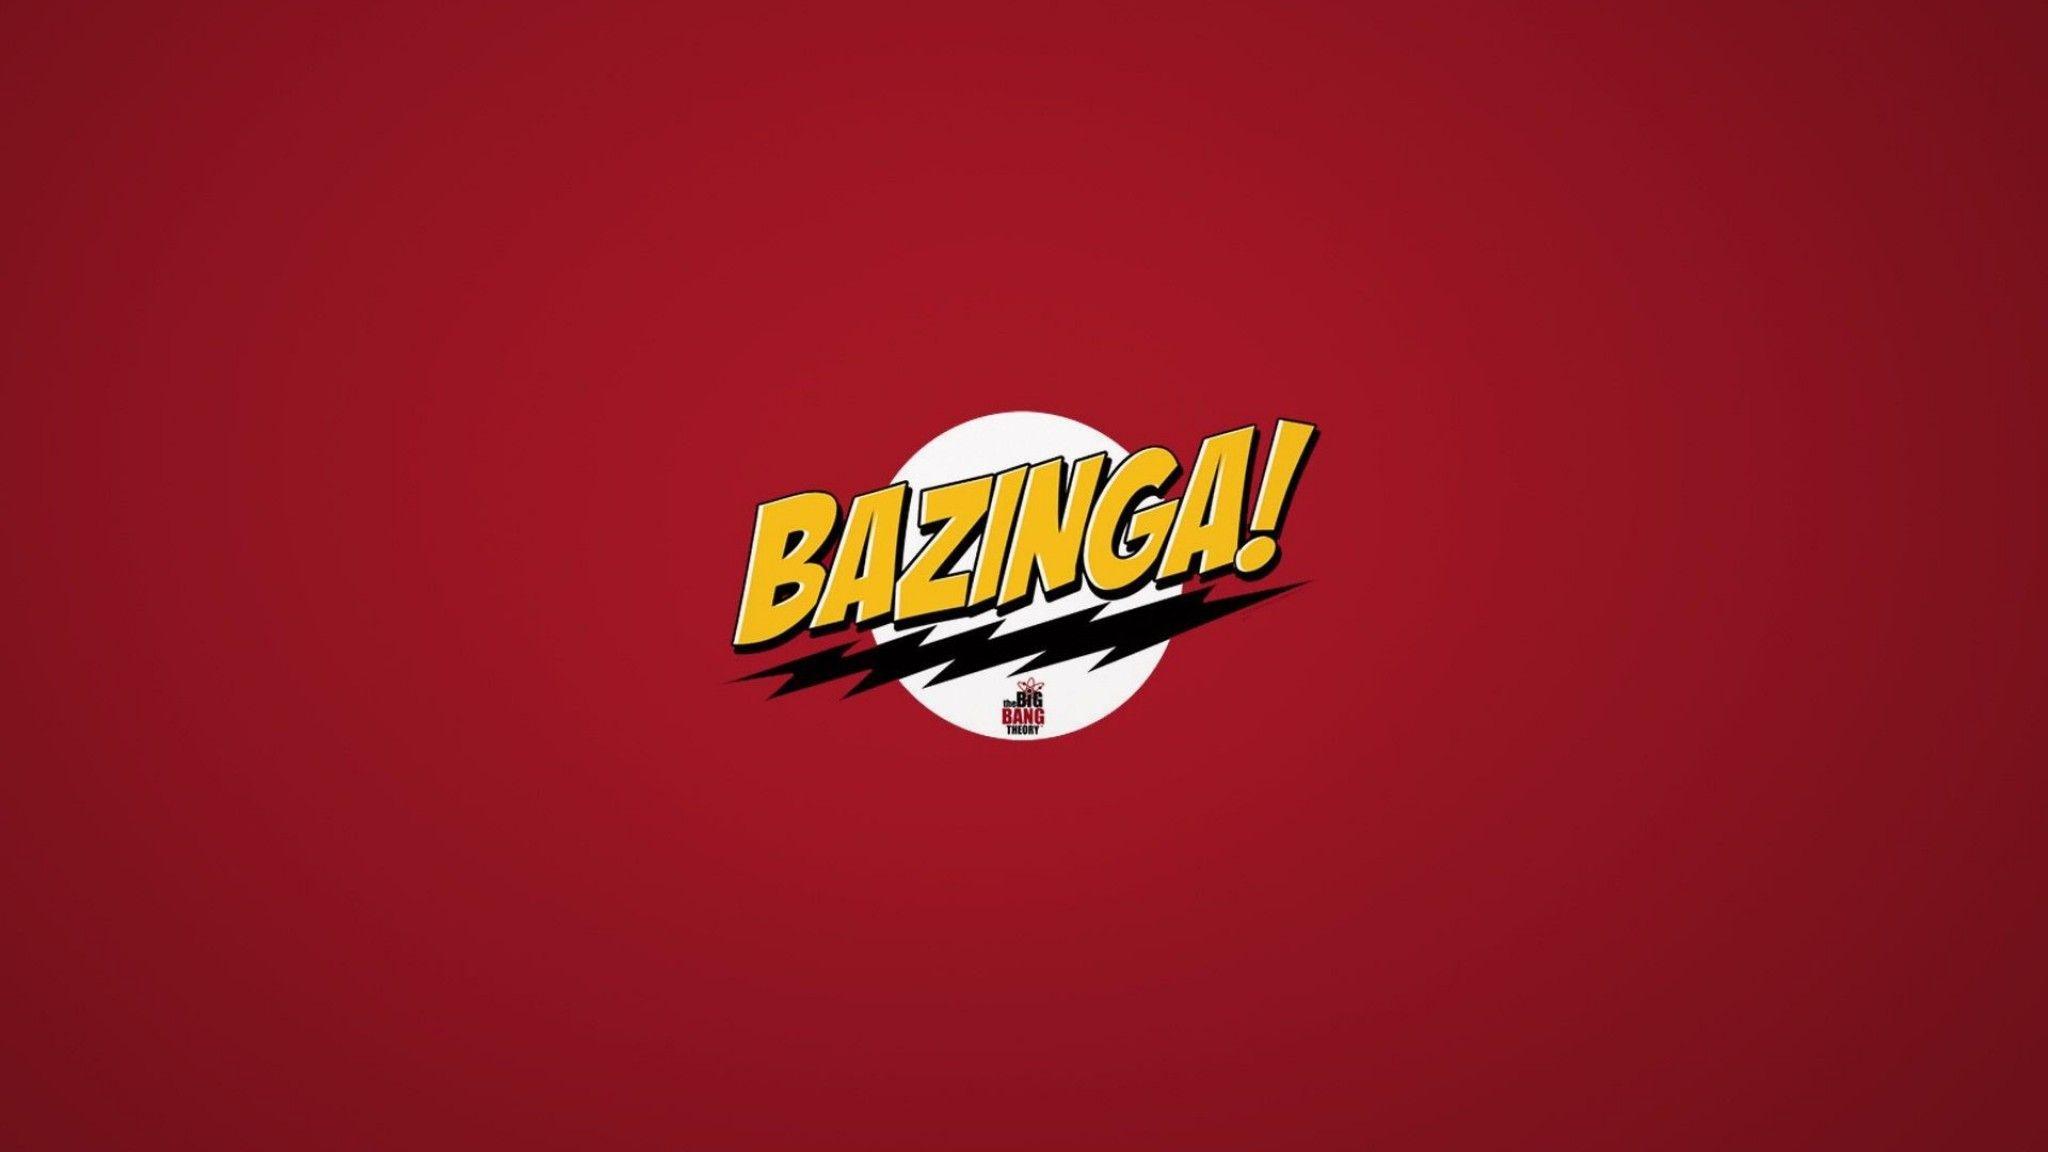 Bazinga HD Wallpaper and Background Image